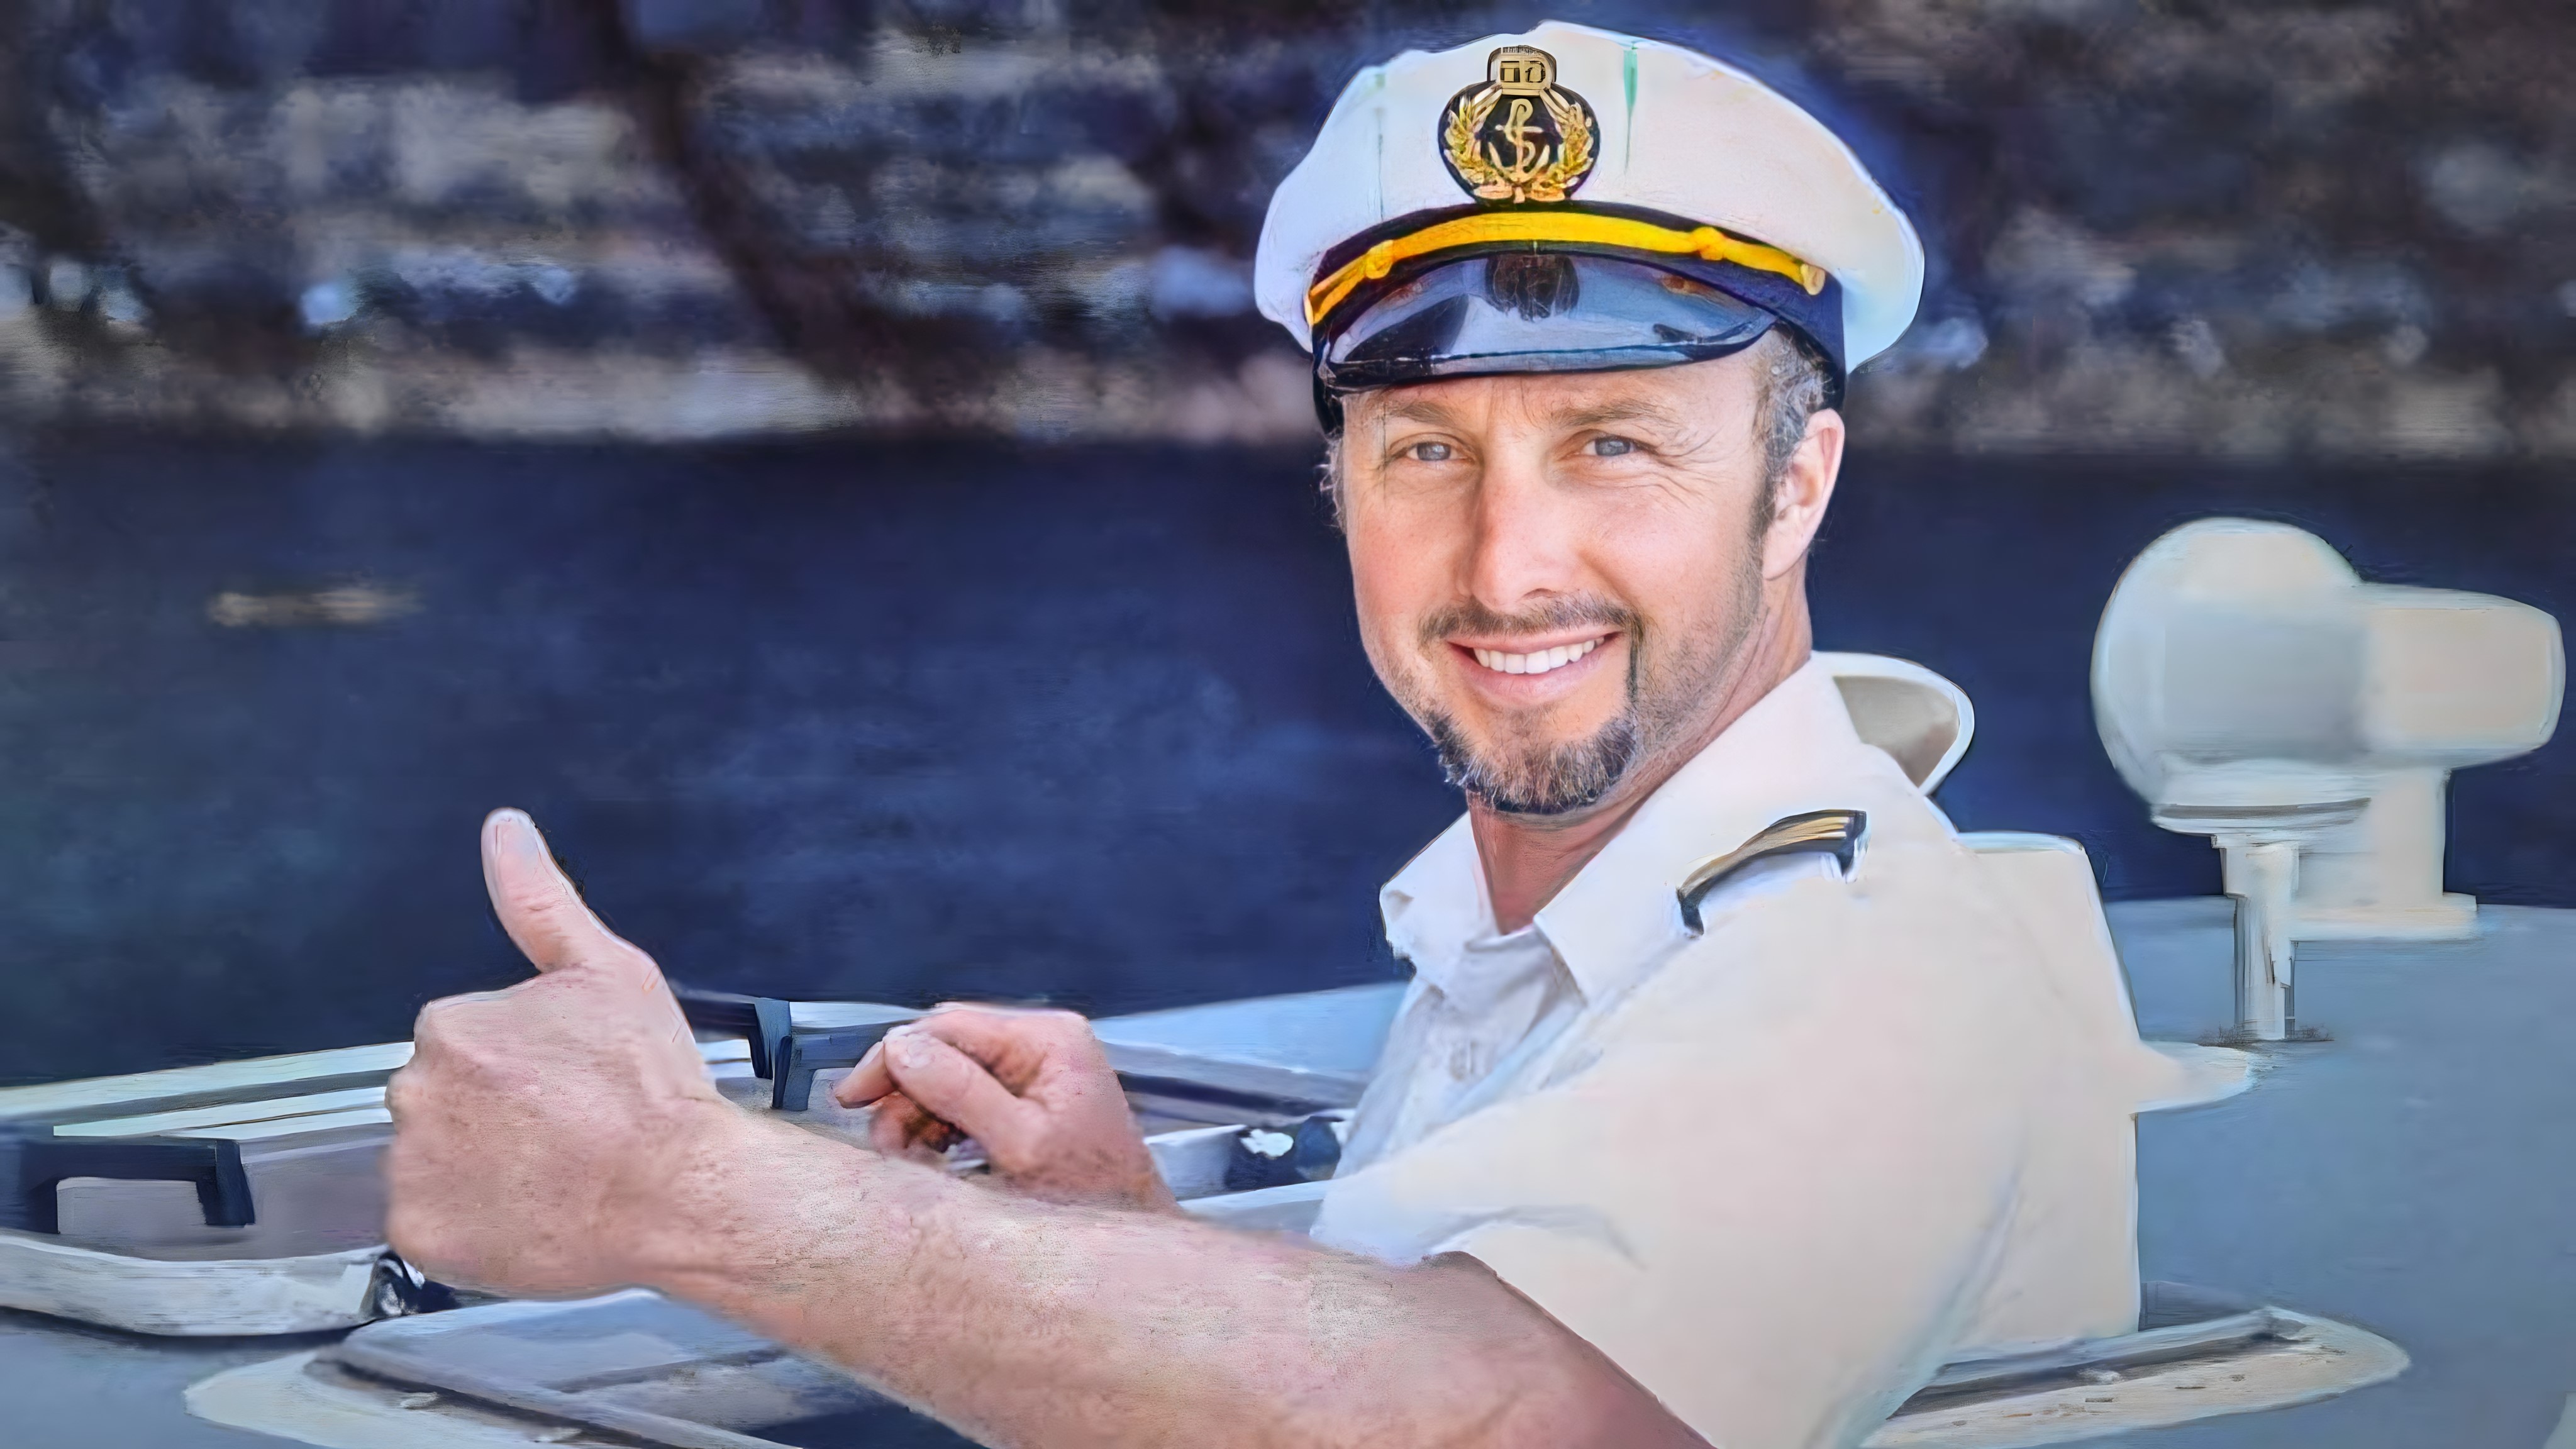 [image] Photo of Julian Yates in uniform on a boat